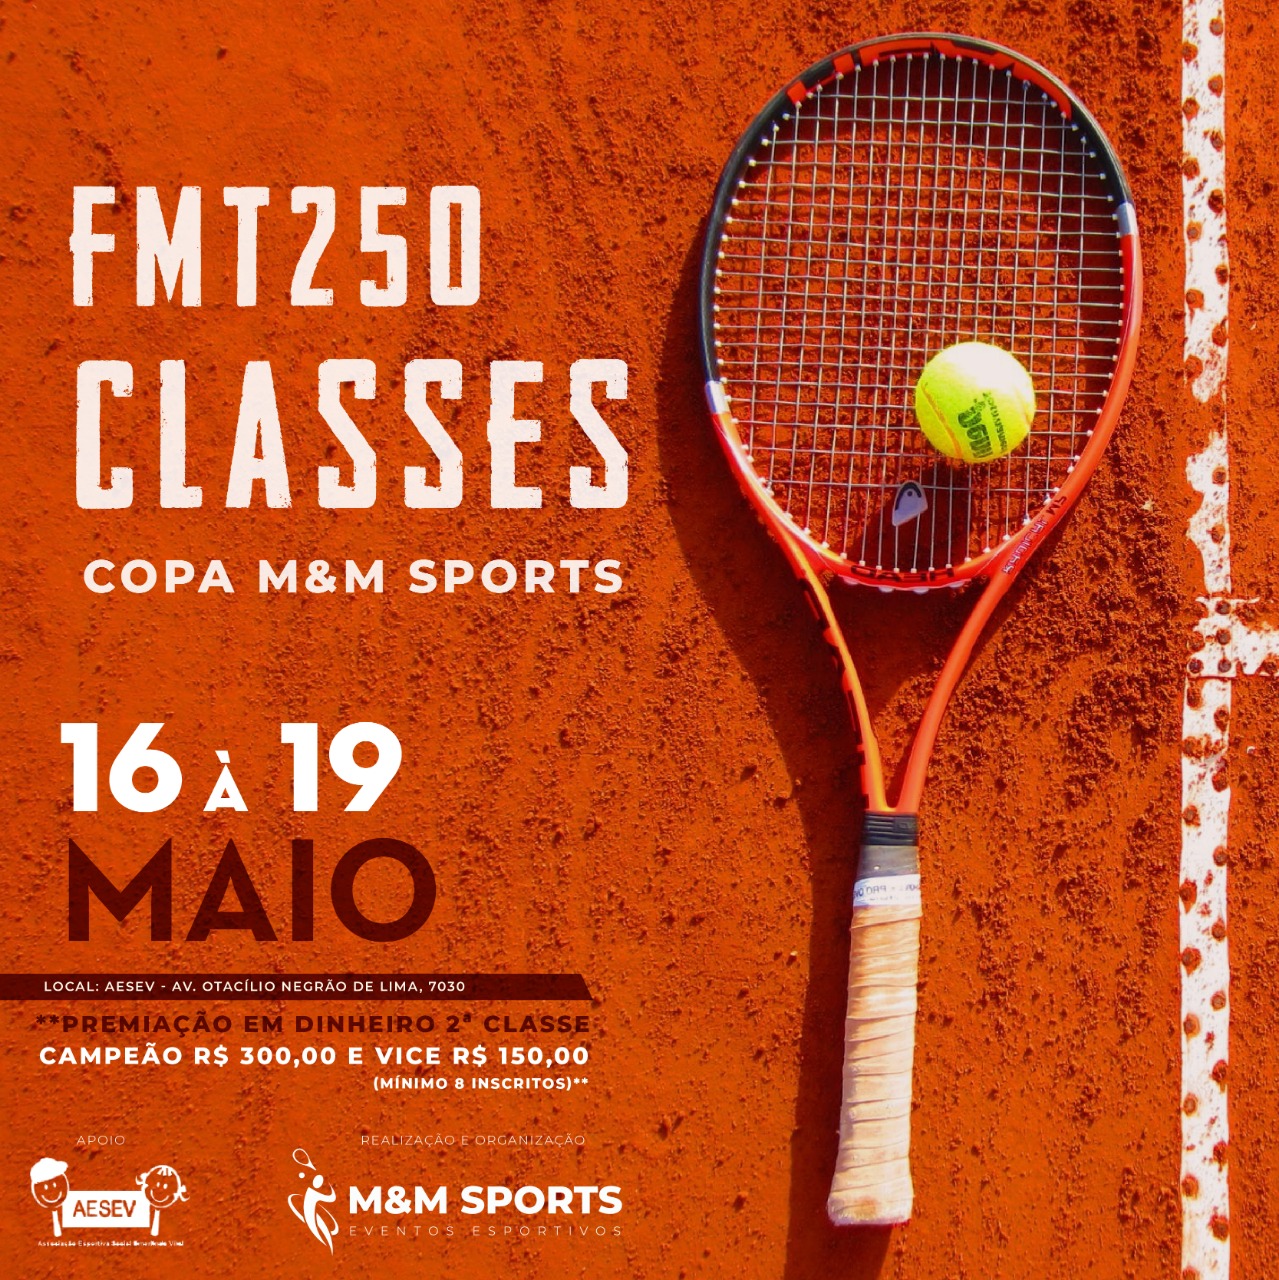 FTMP 250 Classes 2019